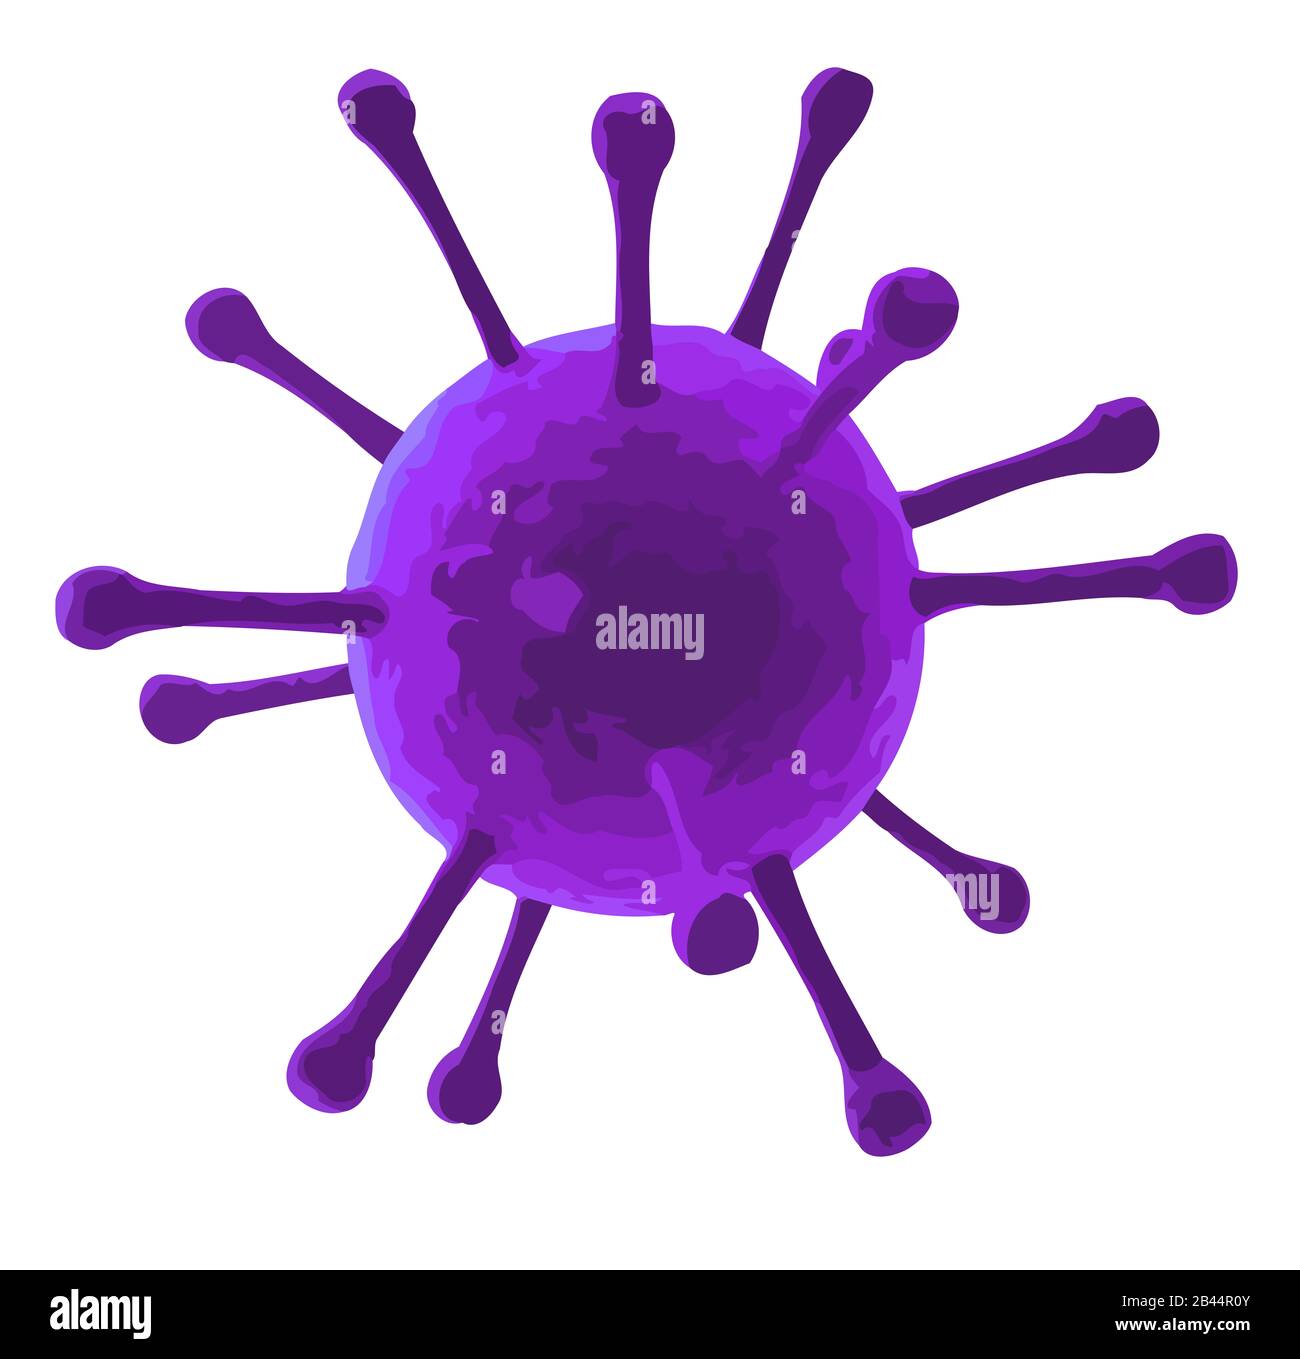 Corona-Virus-Pneumonie virale Infektion medizinische violette Abbildung Stockfoto